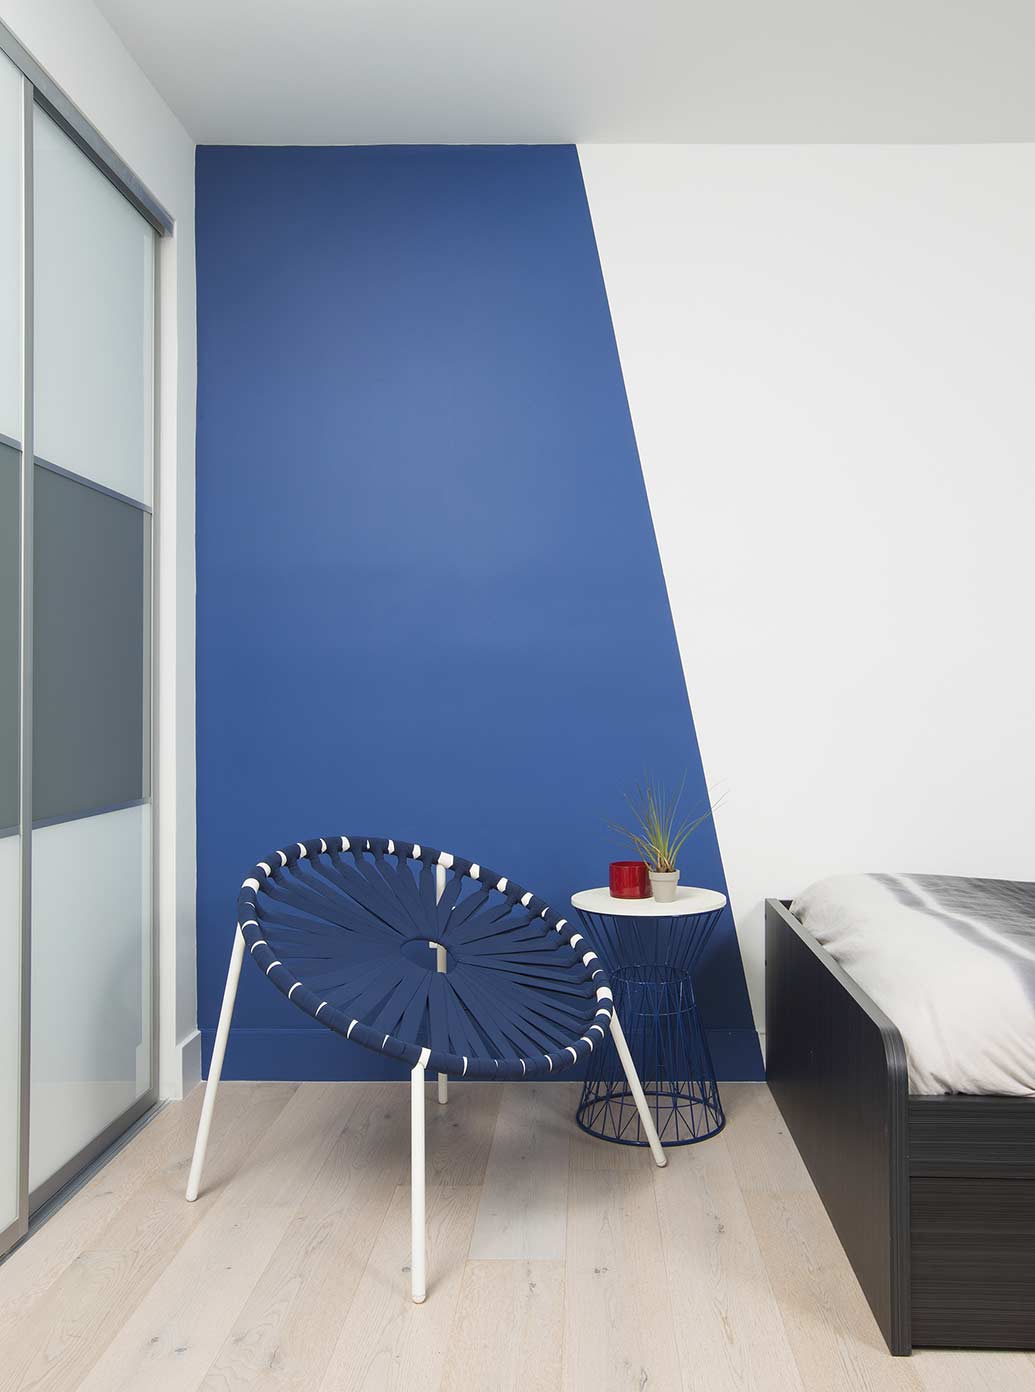 Inspiring Color Blocked Interiors by DKOR Interiors